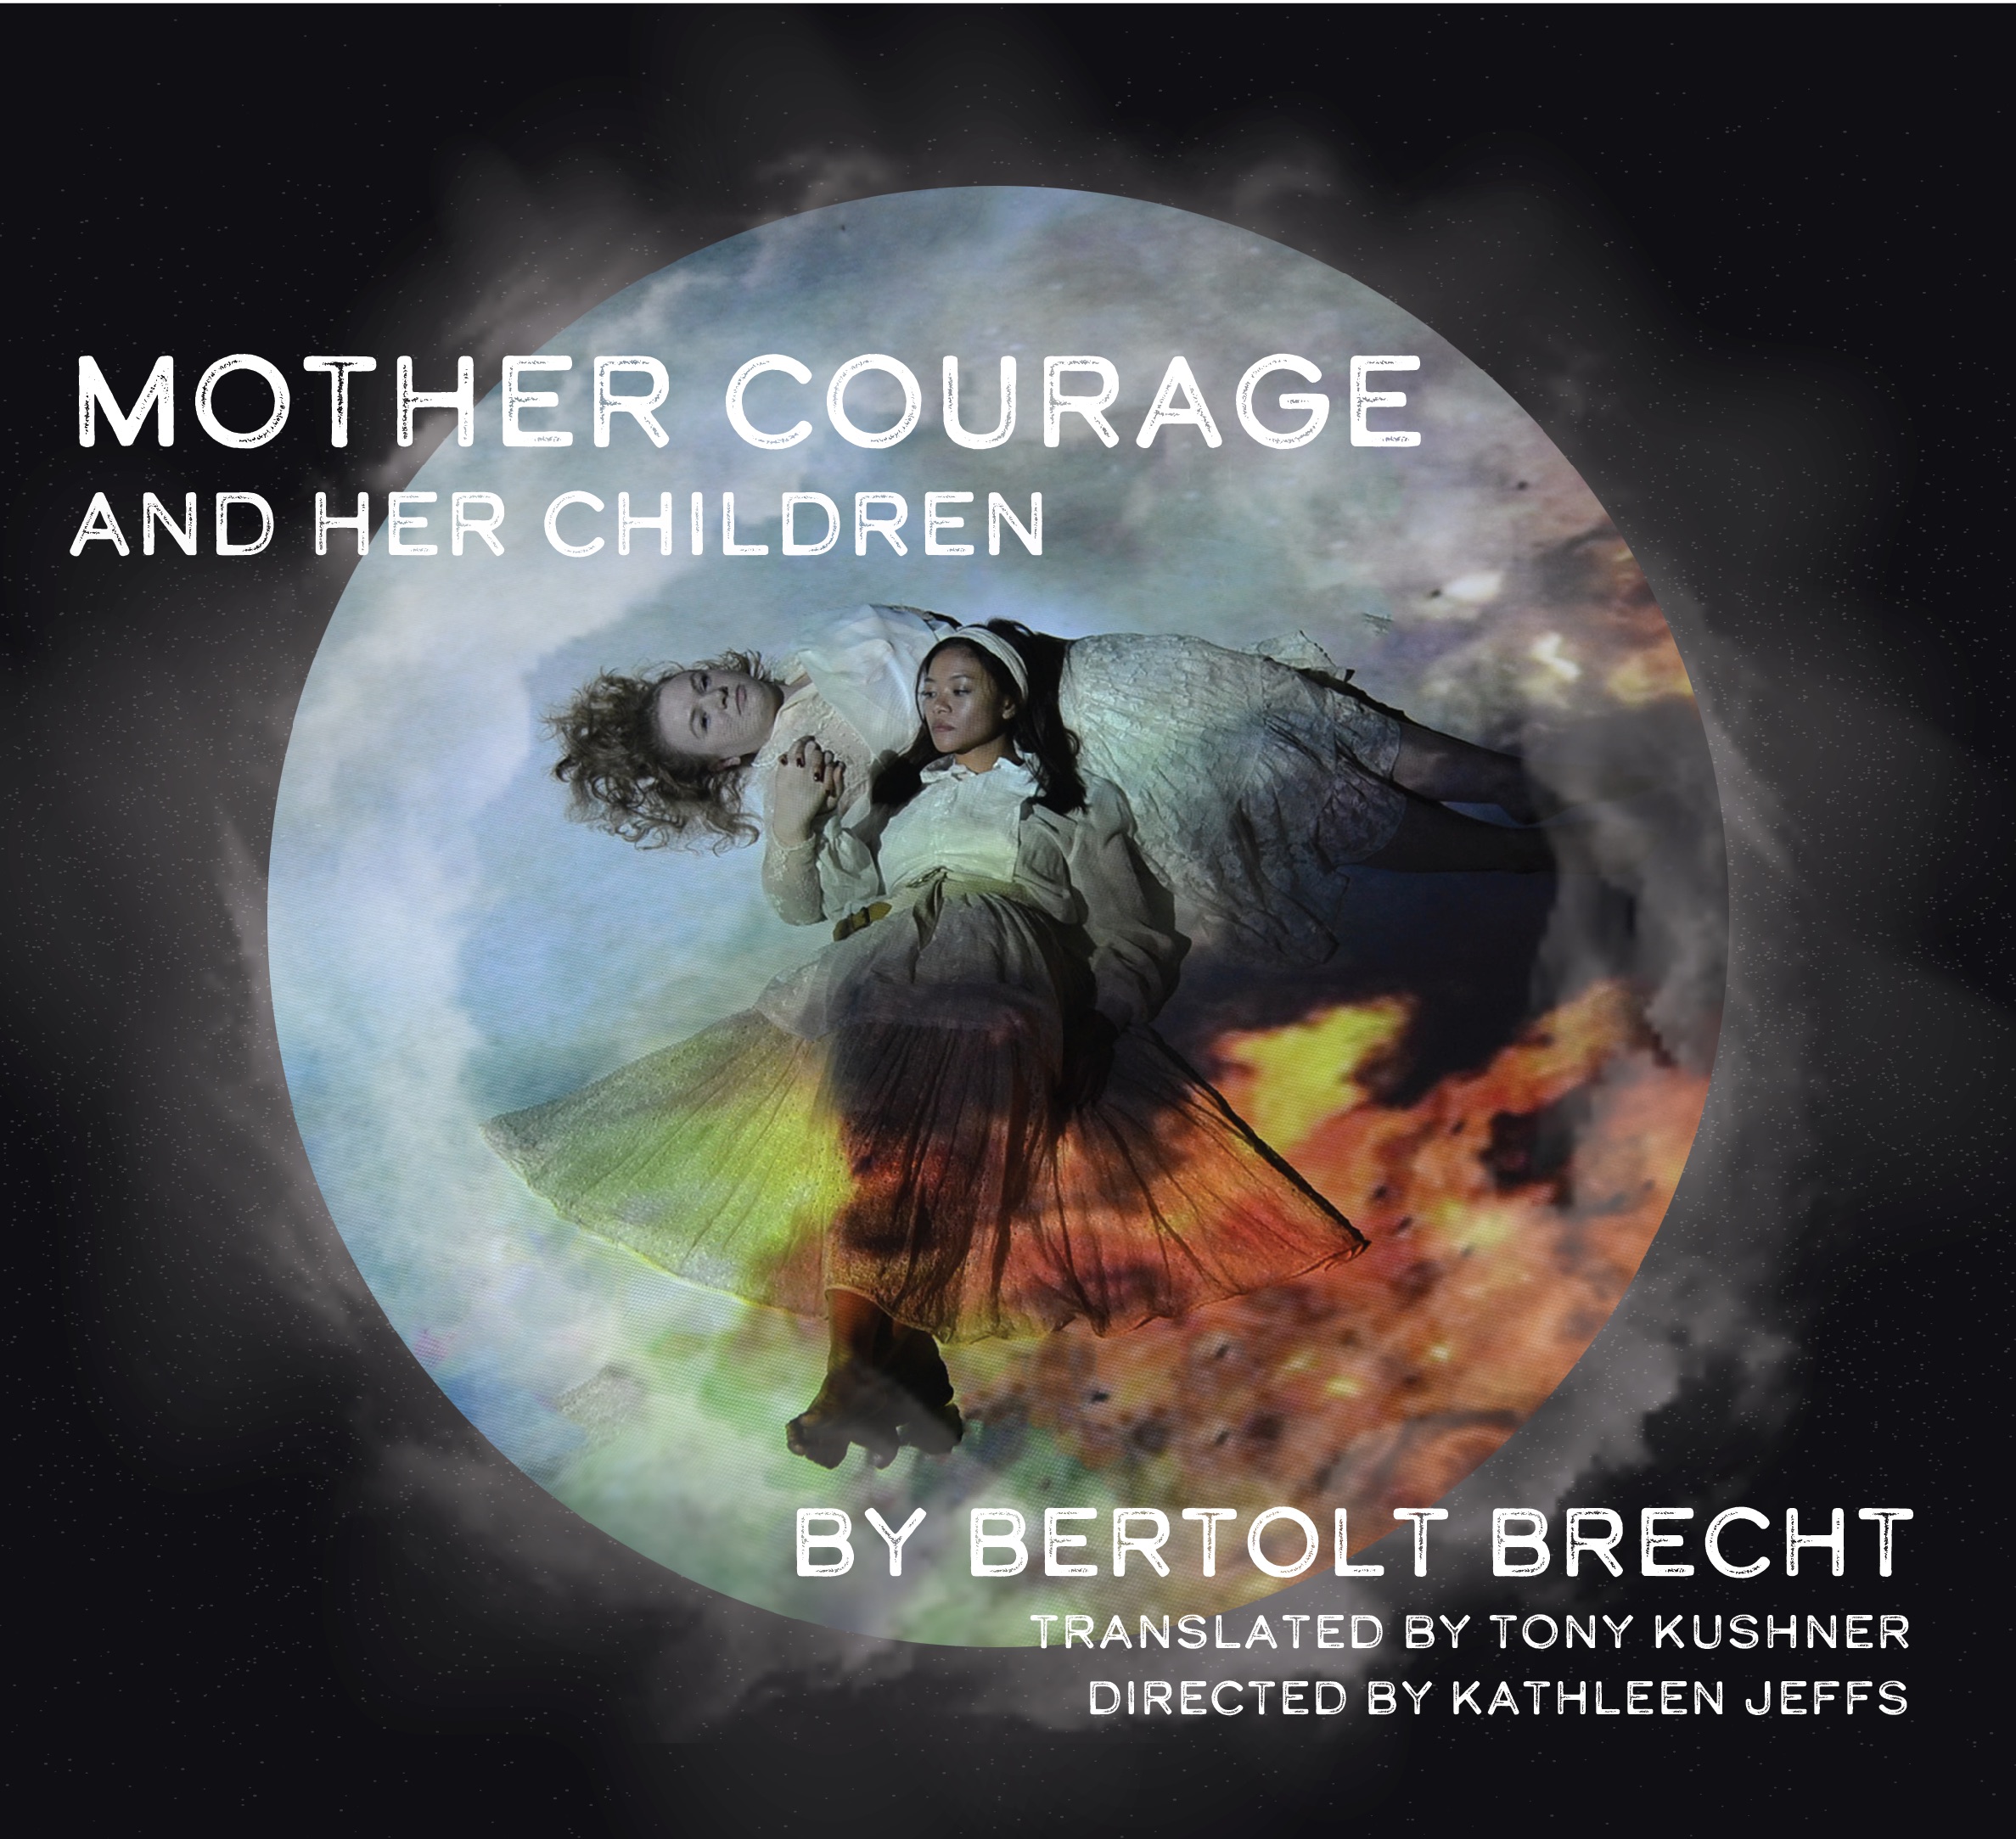 Mother Courage and her Children by Bertolt Brecht